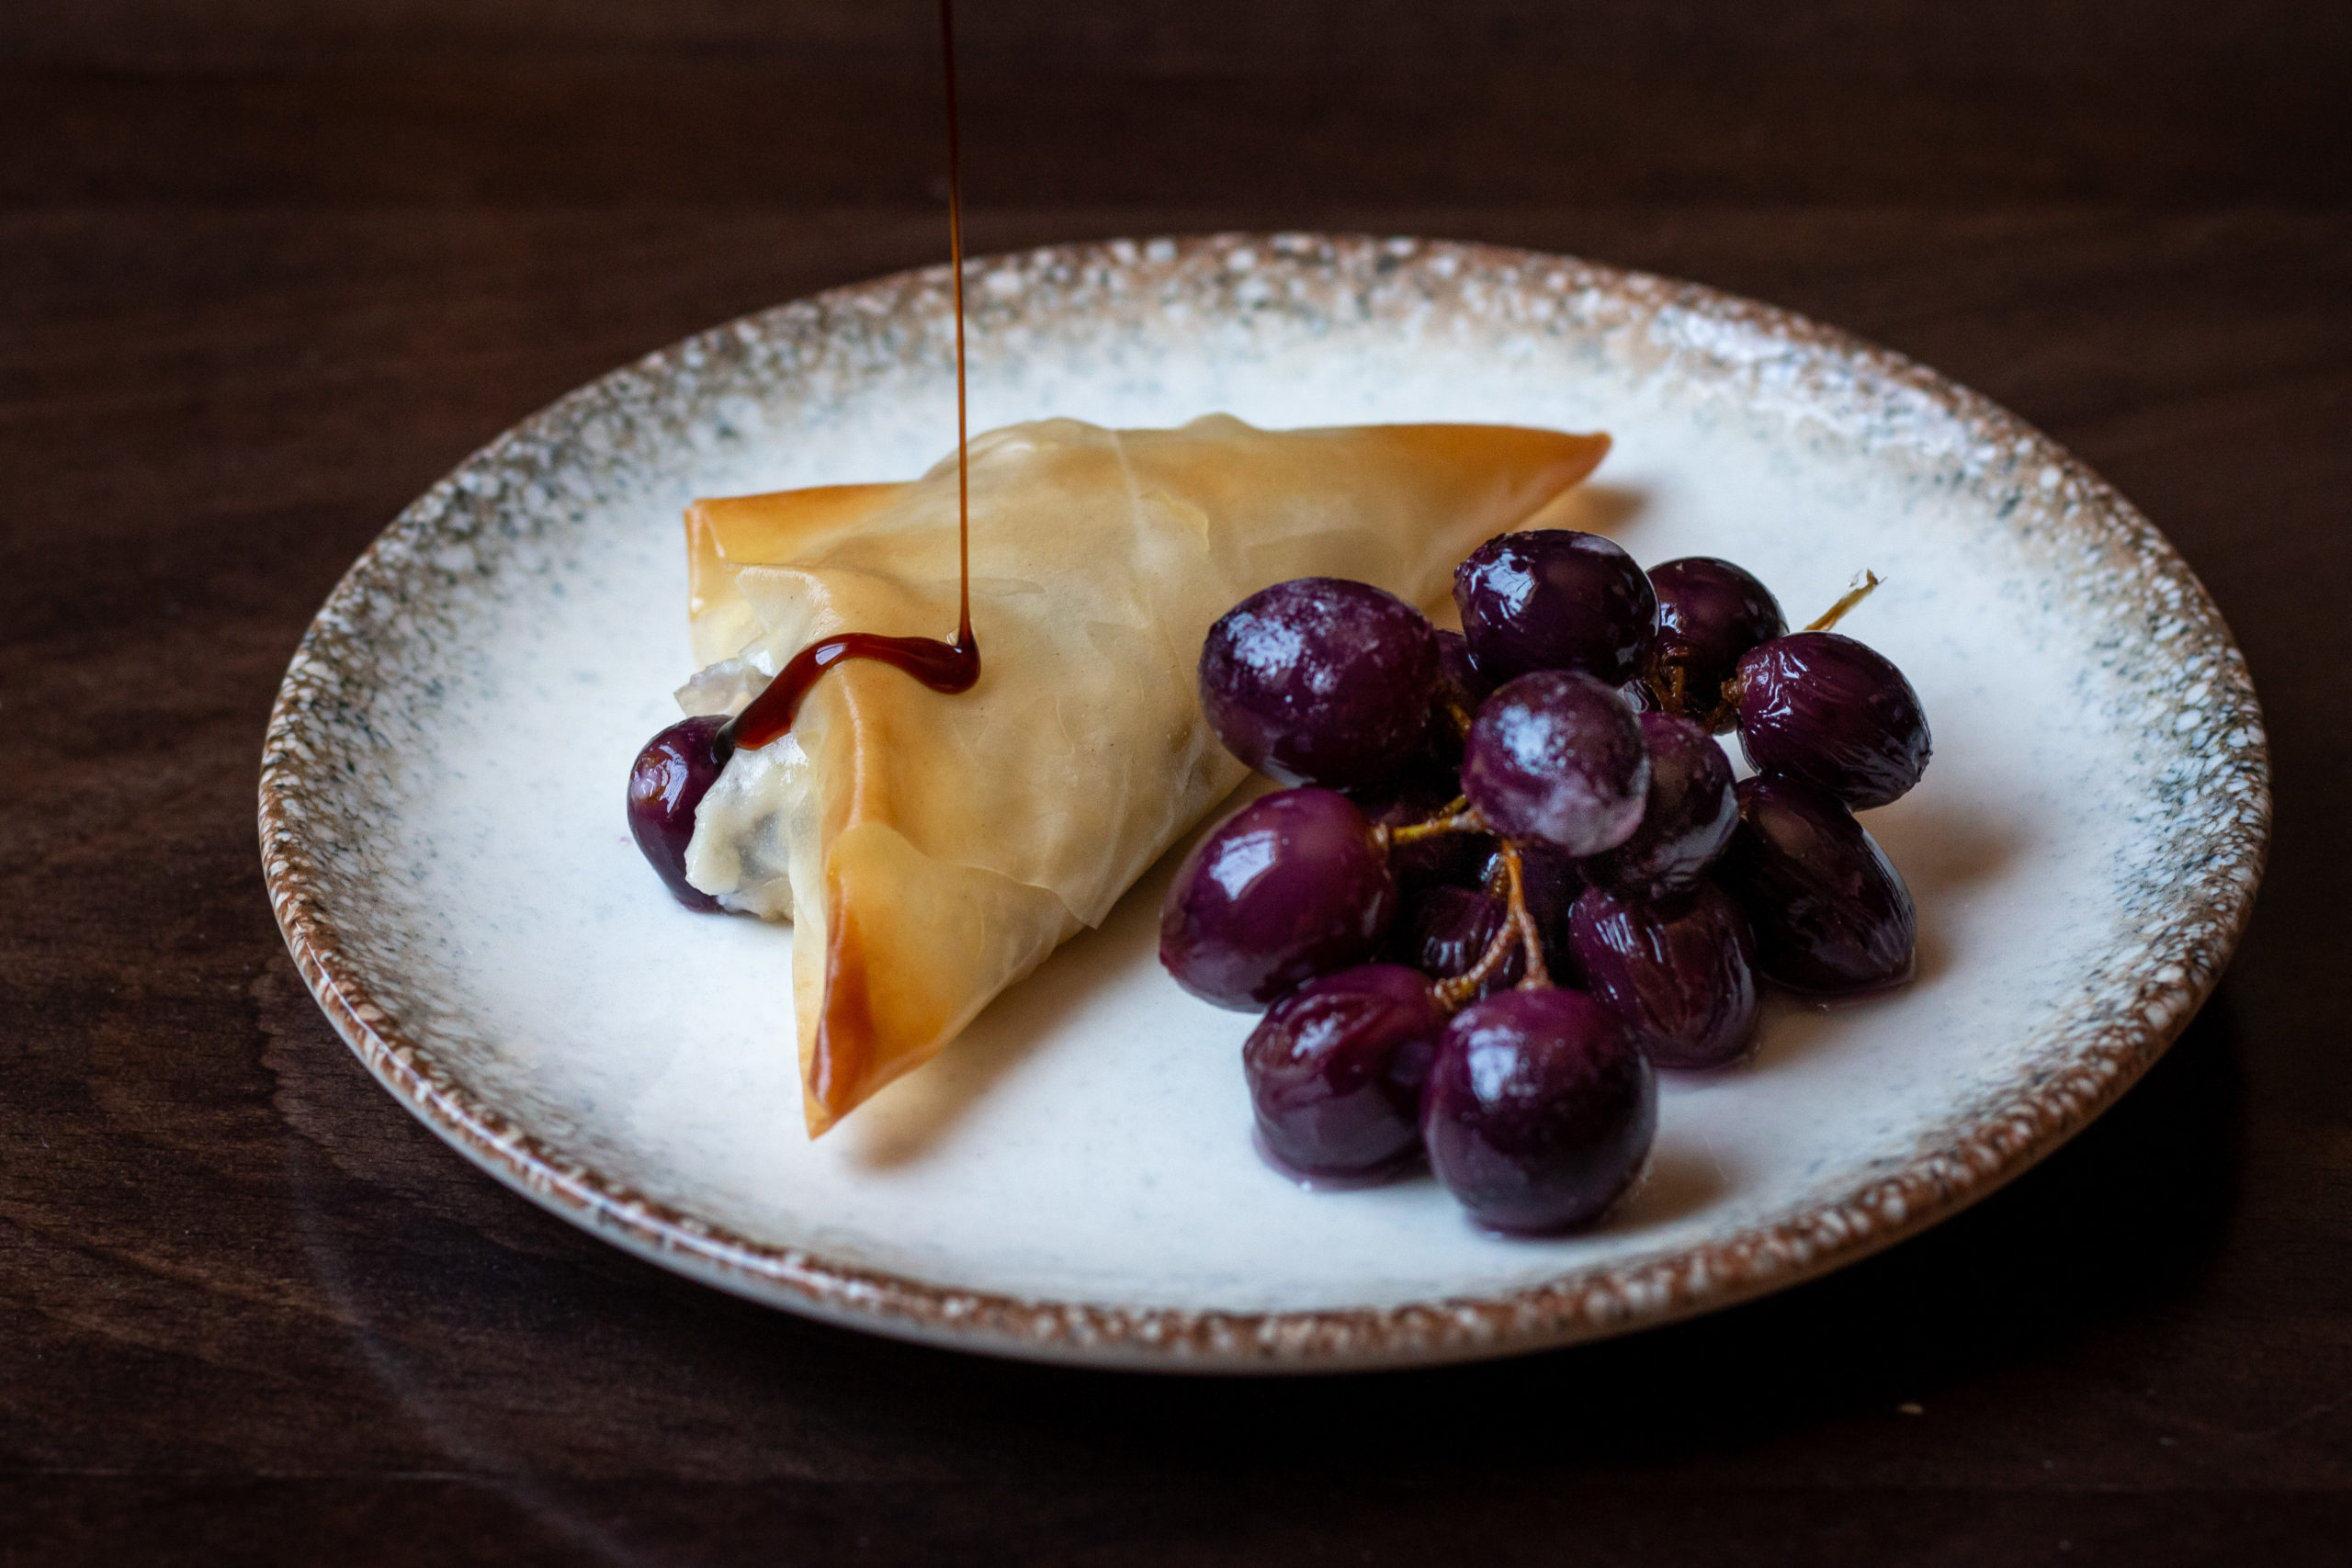 Filo triangles stuffed with kashta, grapes and raisins on a white plate